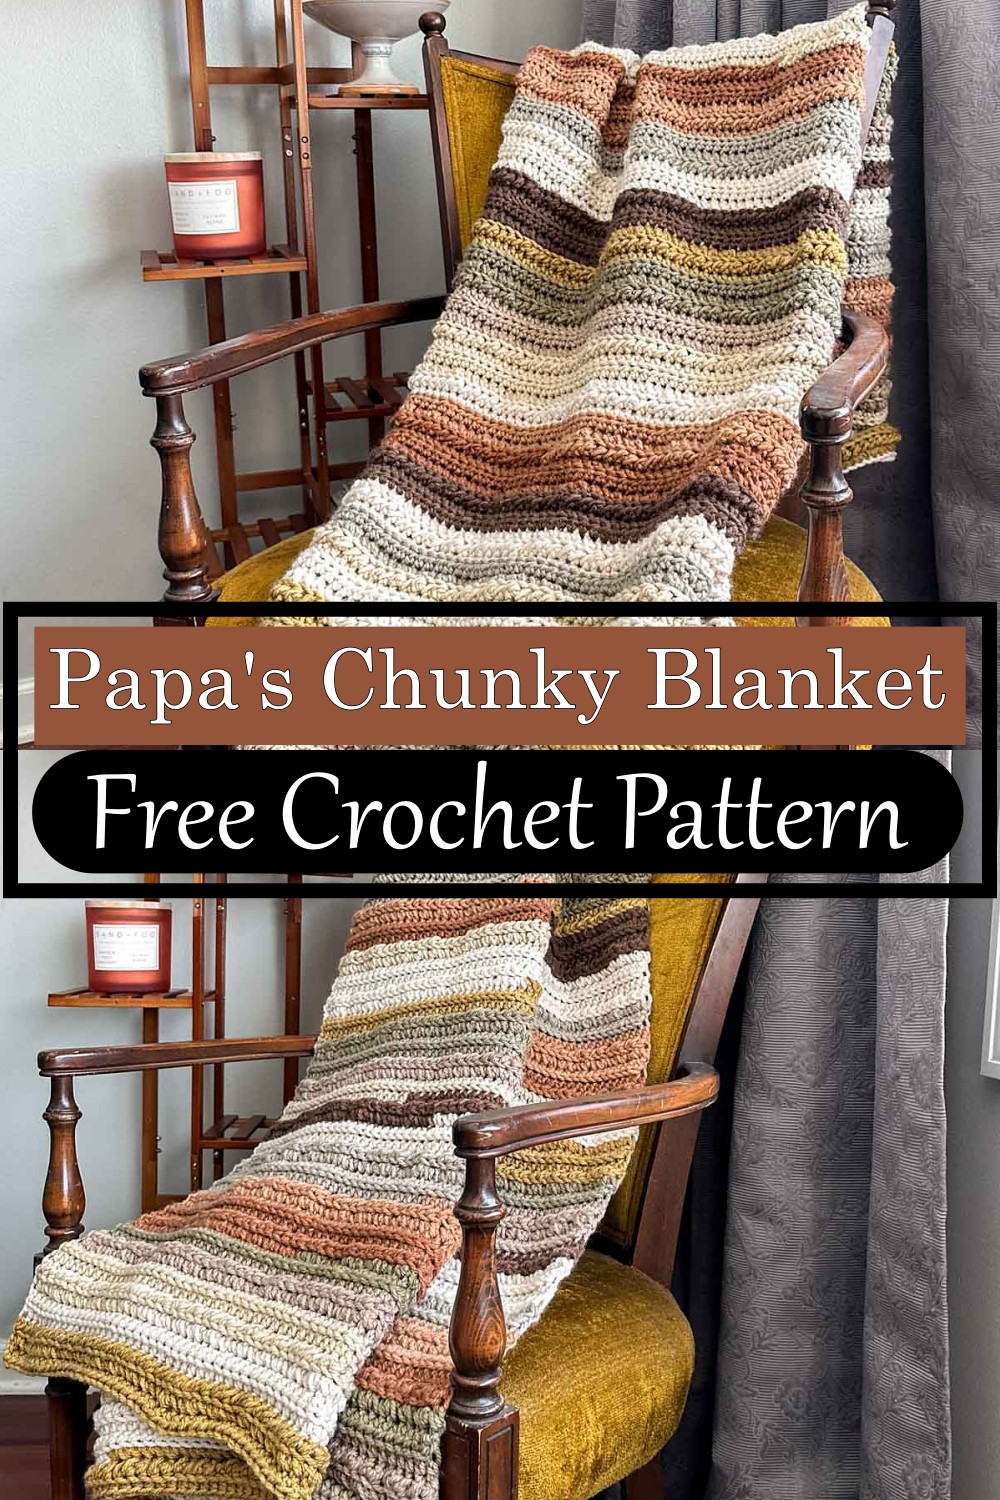 Papa's Chunky Blanket